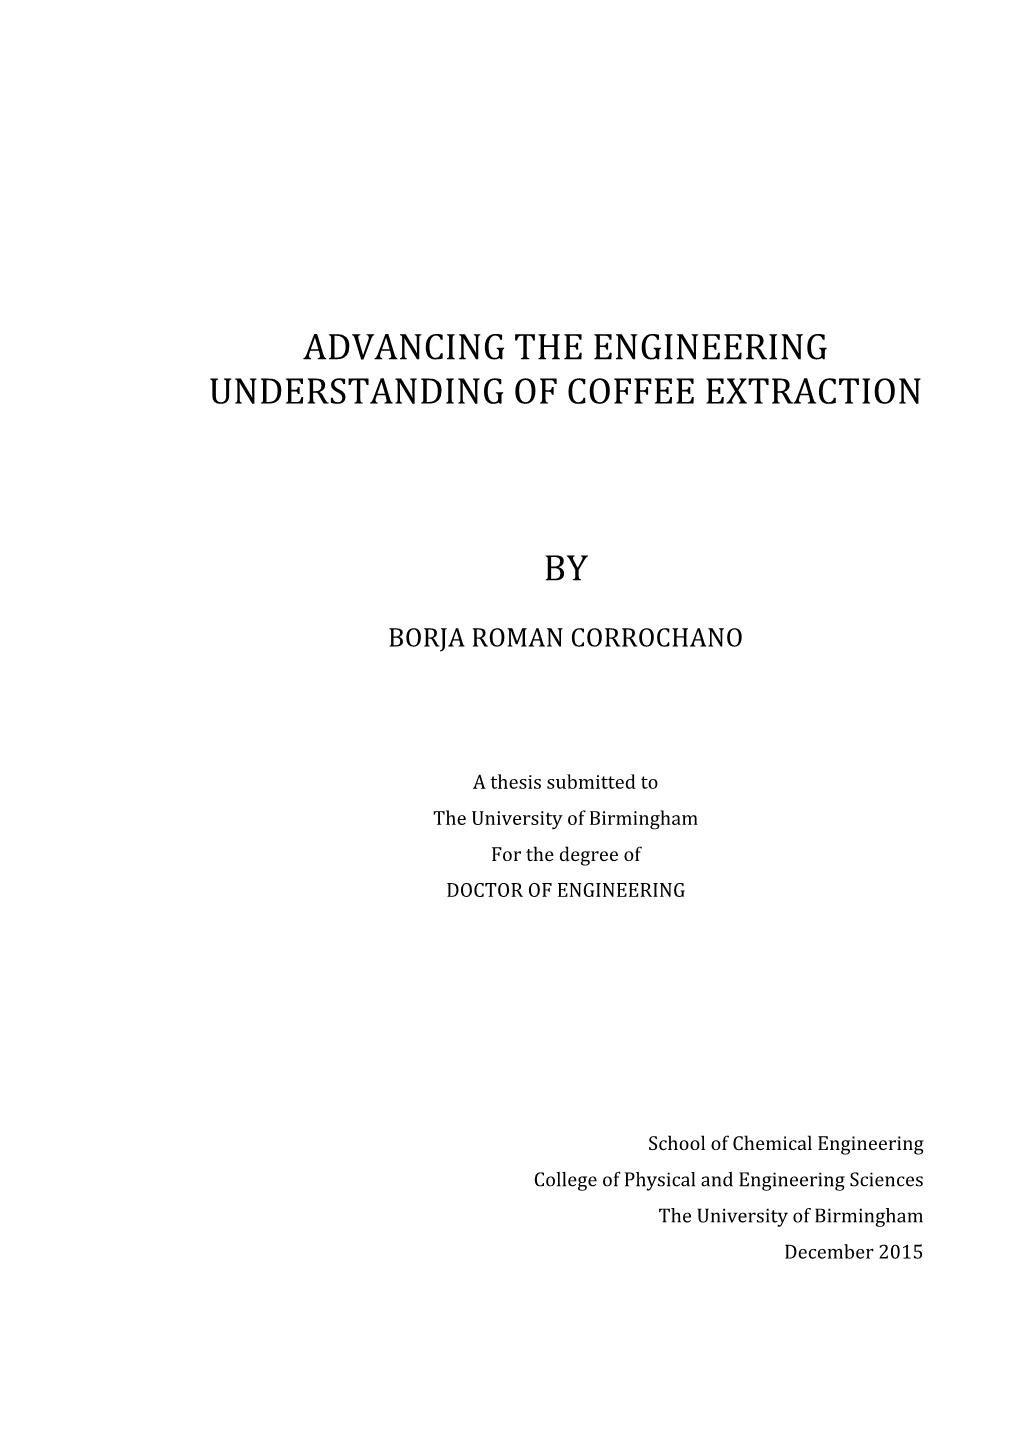 Advancing the Engineering Understanding of Coffee